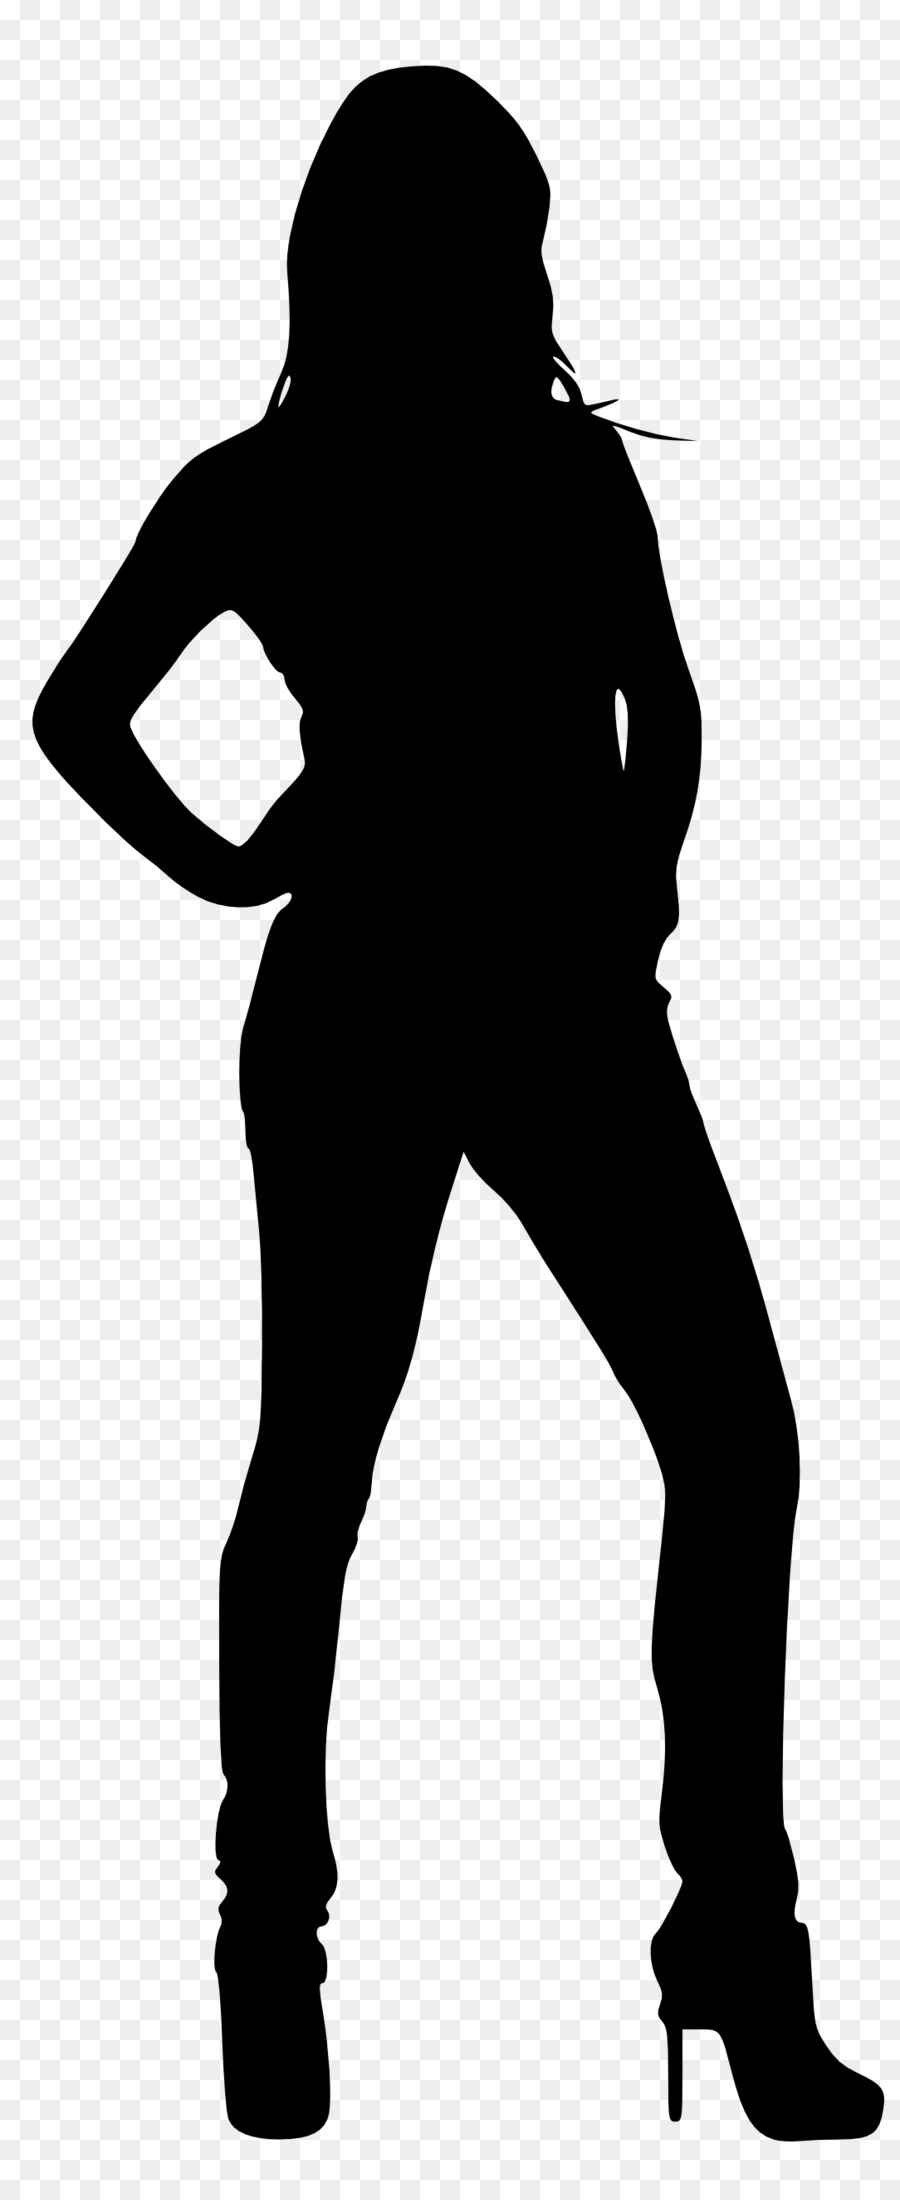 Silhouette Woman Female Clip art - silhoutte png download - 1084*2641 - Free Transparent Silhouette png Download.